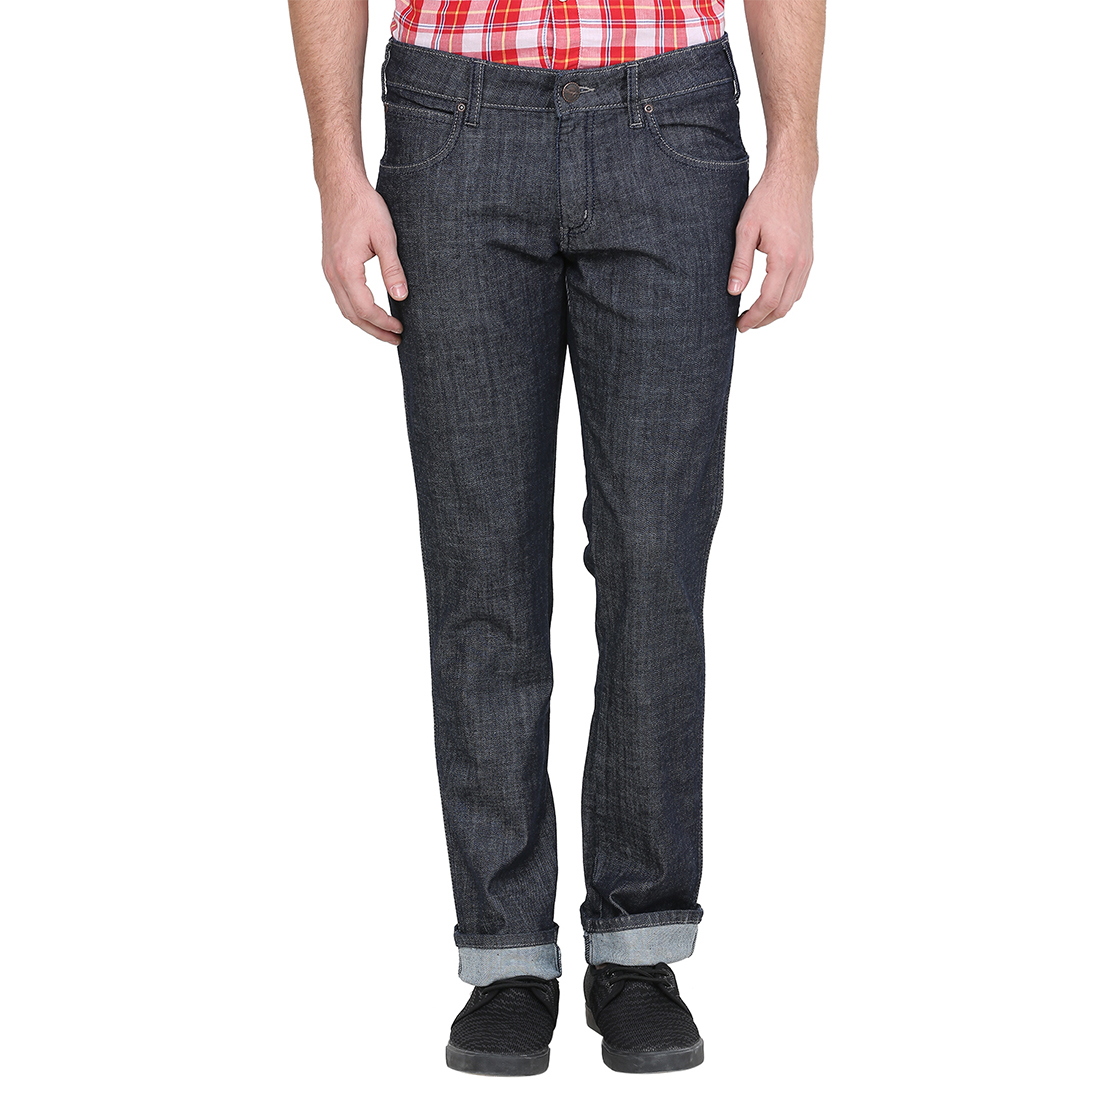 Buy Wrangler Black Casual Cotton Jeans for Men Online @ ₹1607 from ...